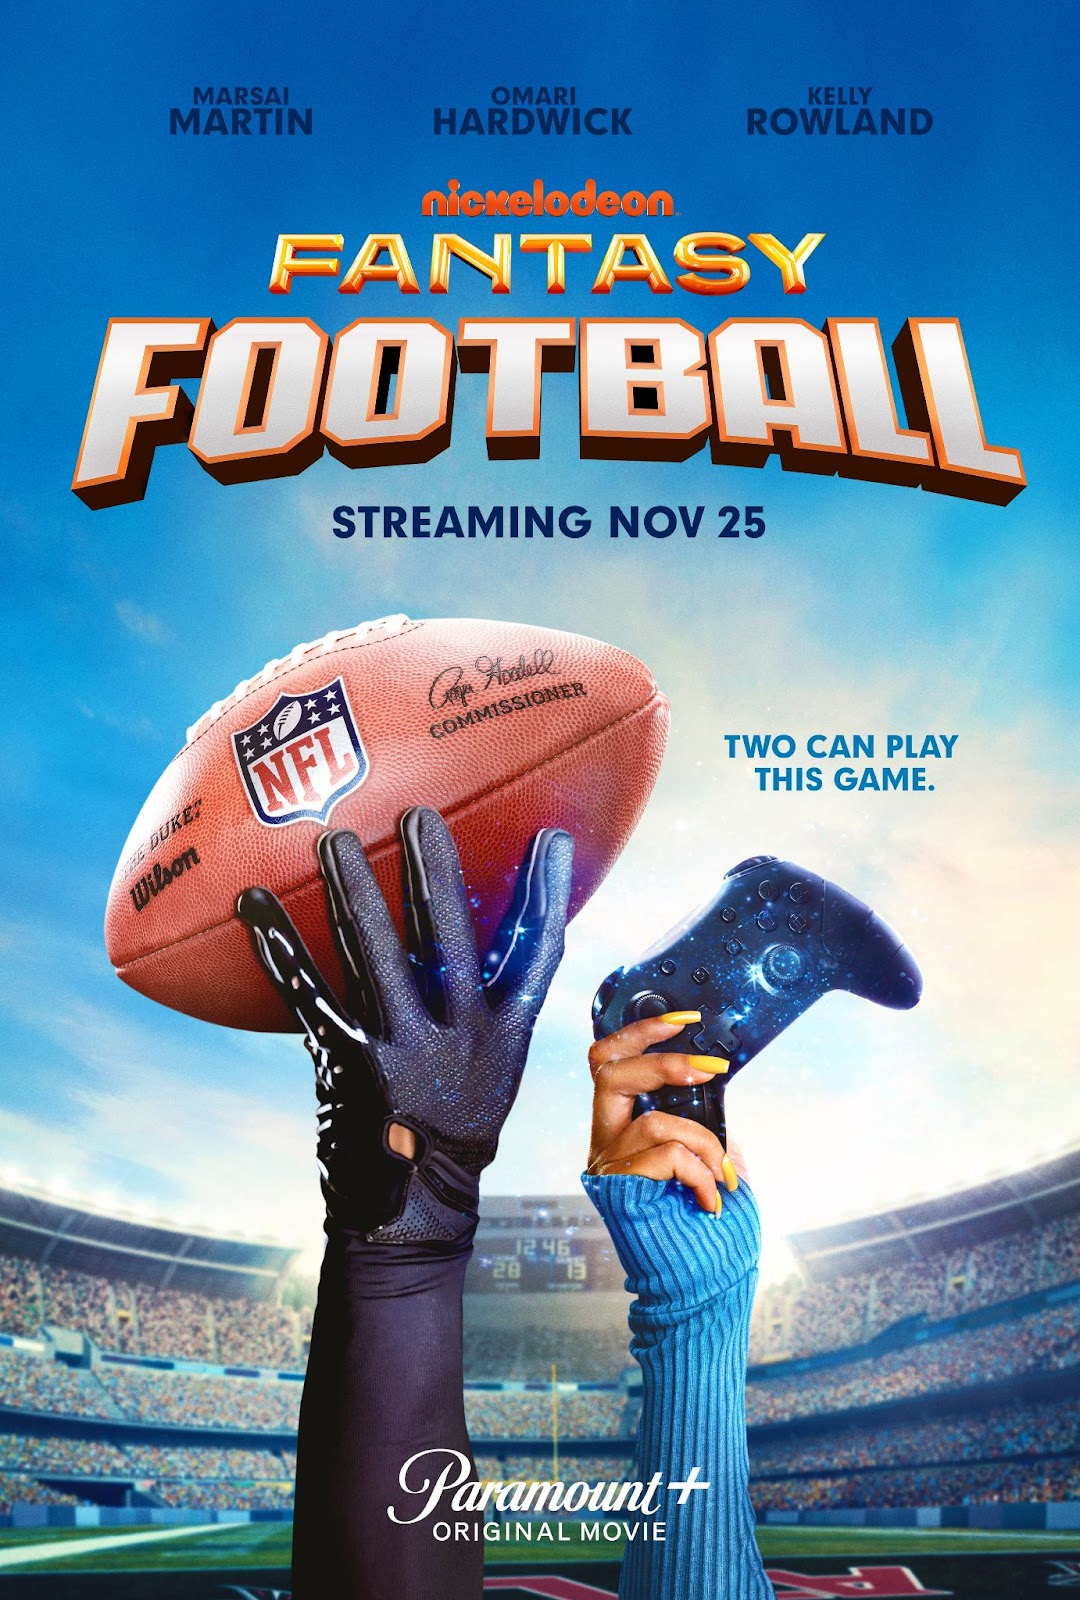 Fantasy Football Set To Premiere November 25 On Paramount+